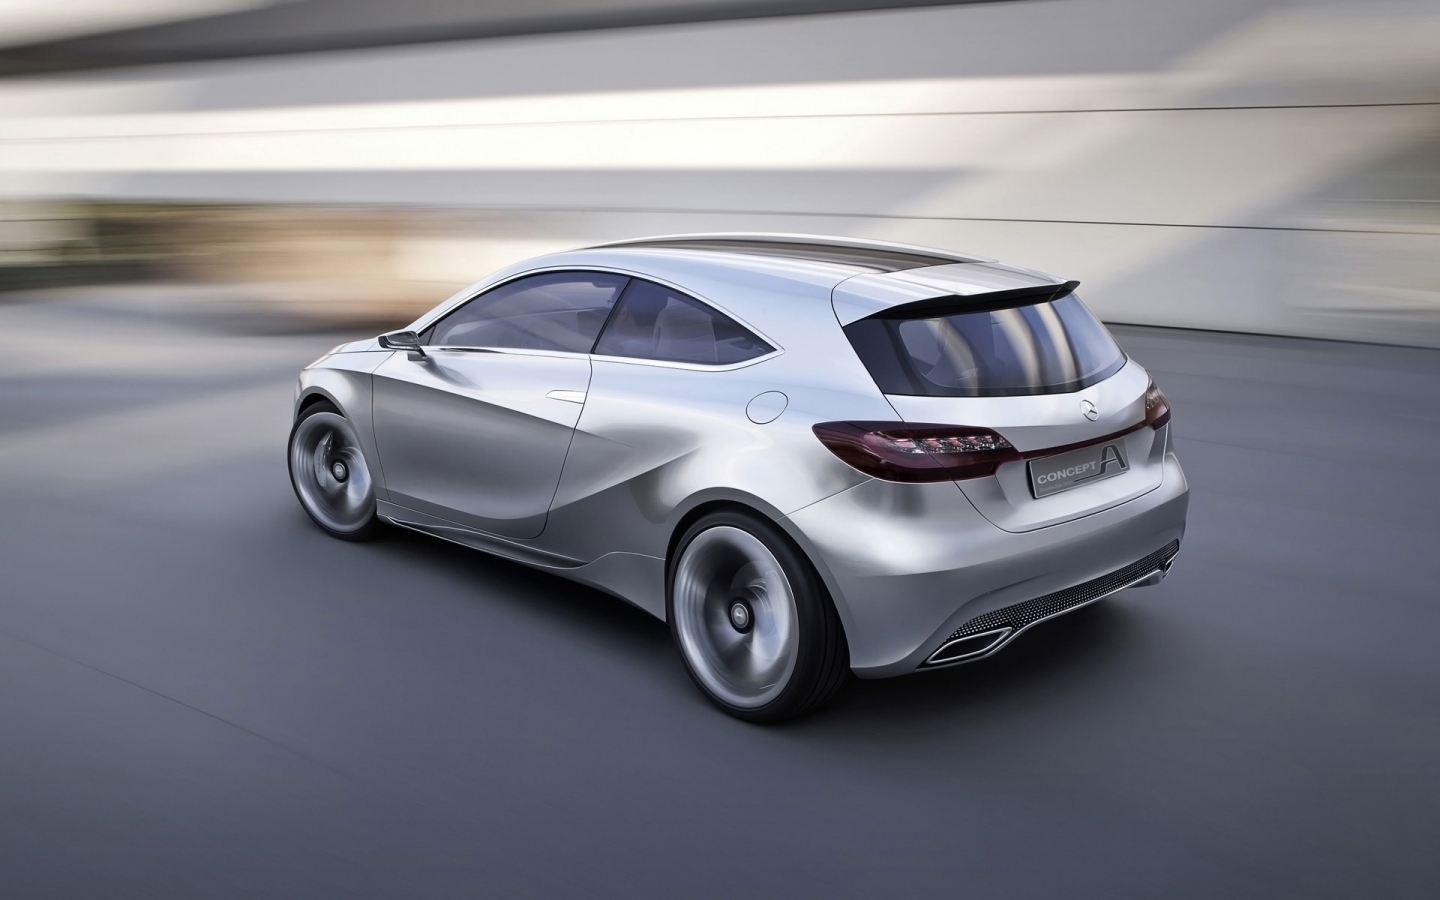 Mercedes Benz Concept A Class Rear for 1440 x 900 widescreen resolution